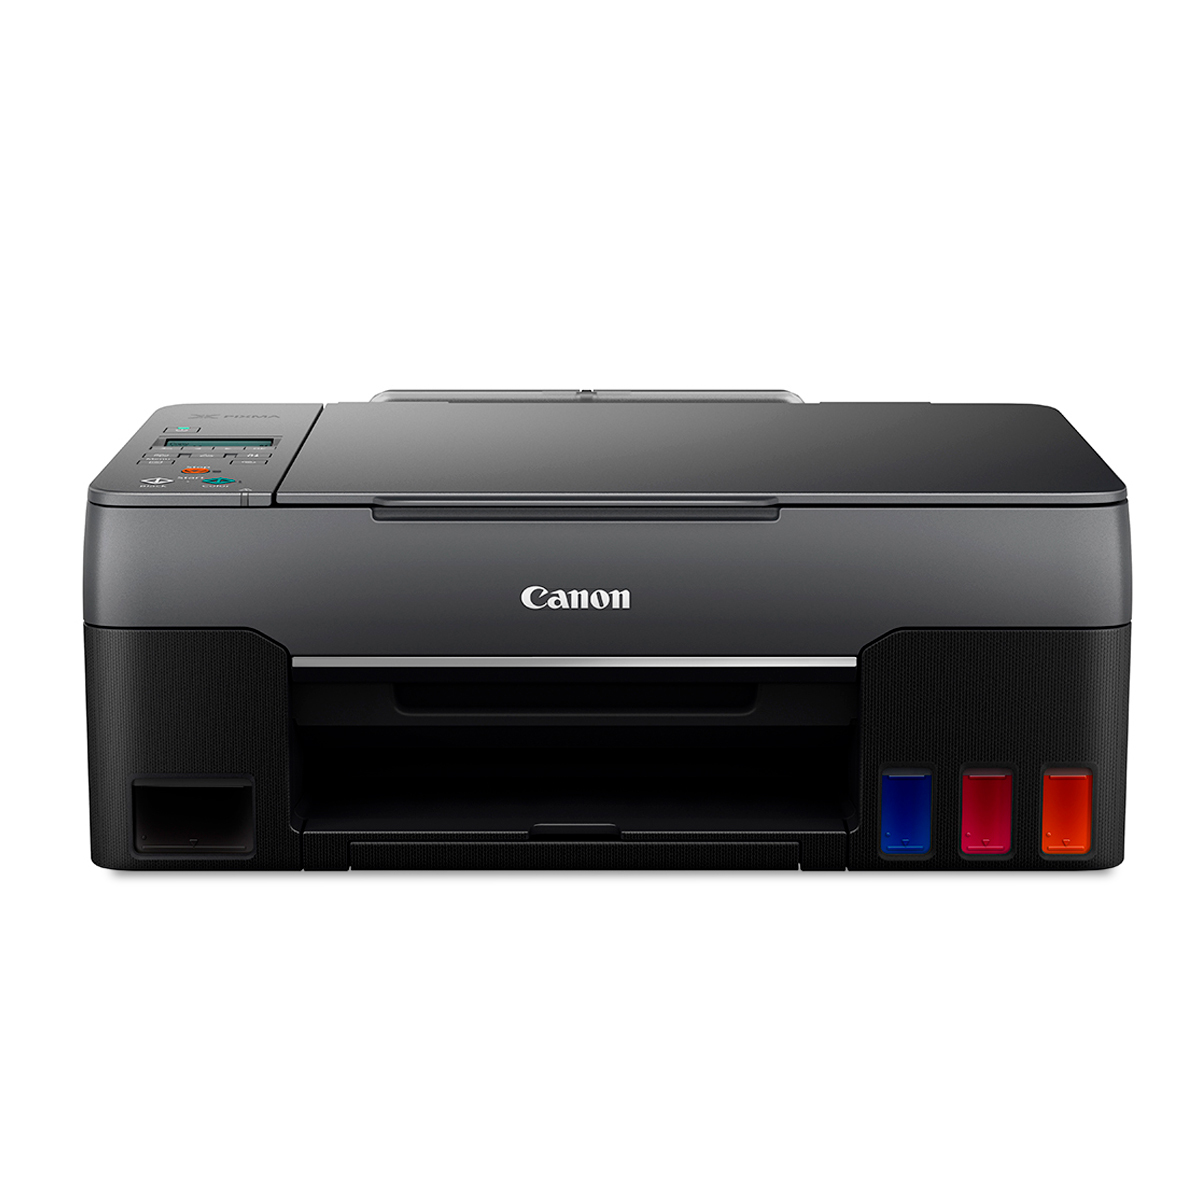 Impresora Multifuncional Canon Pixma G3160 Tinta continua Color